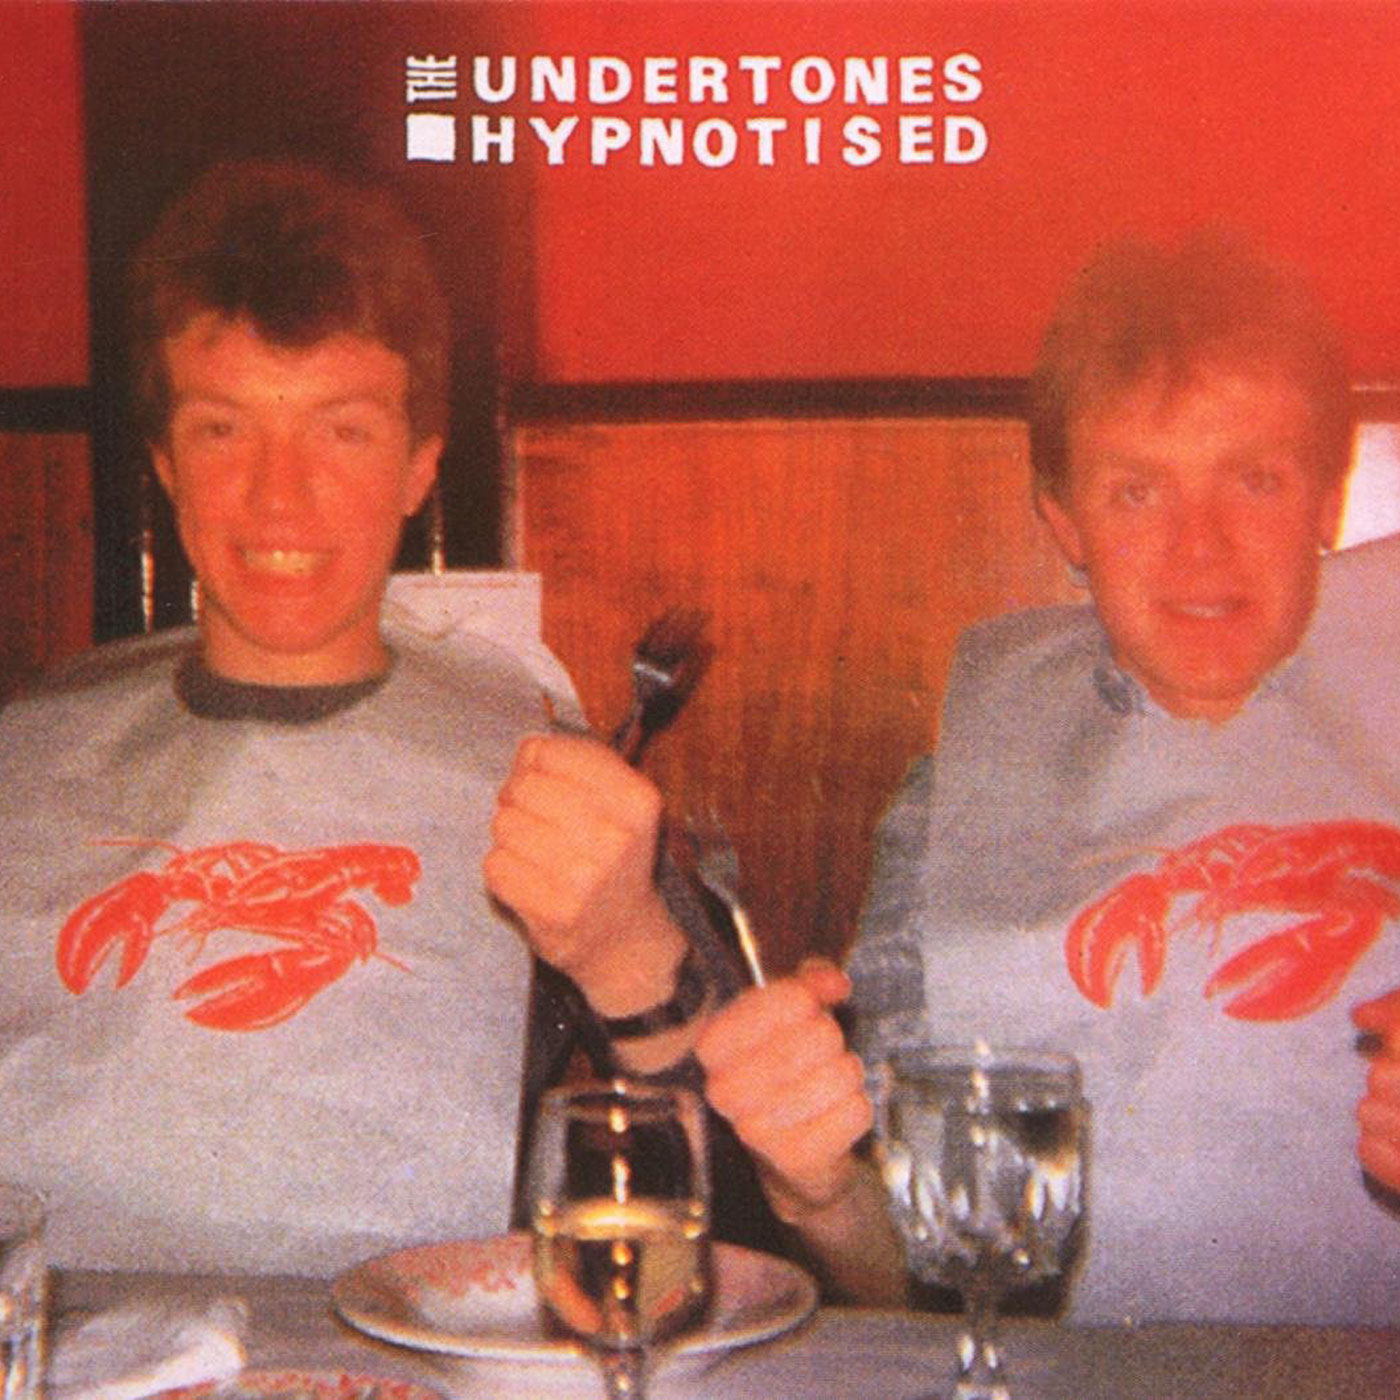 470 The Undertones – Hypnotised